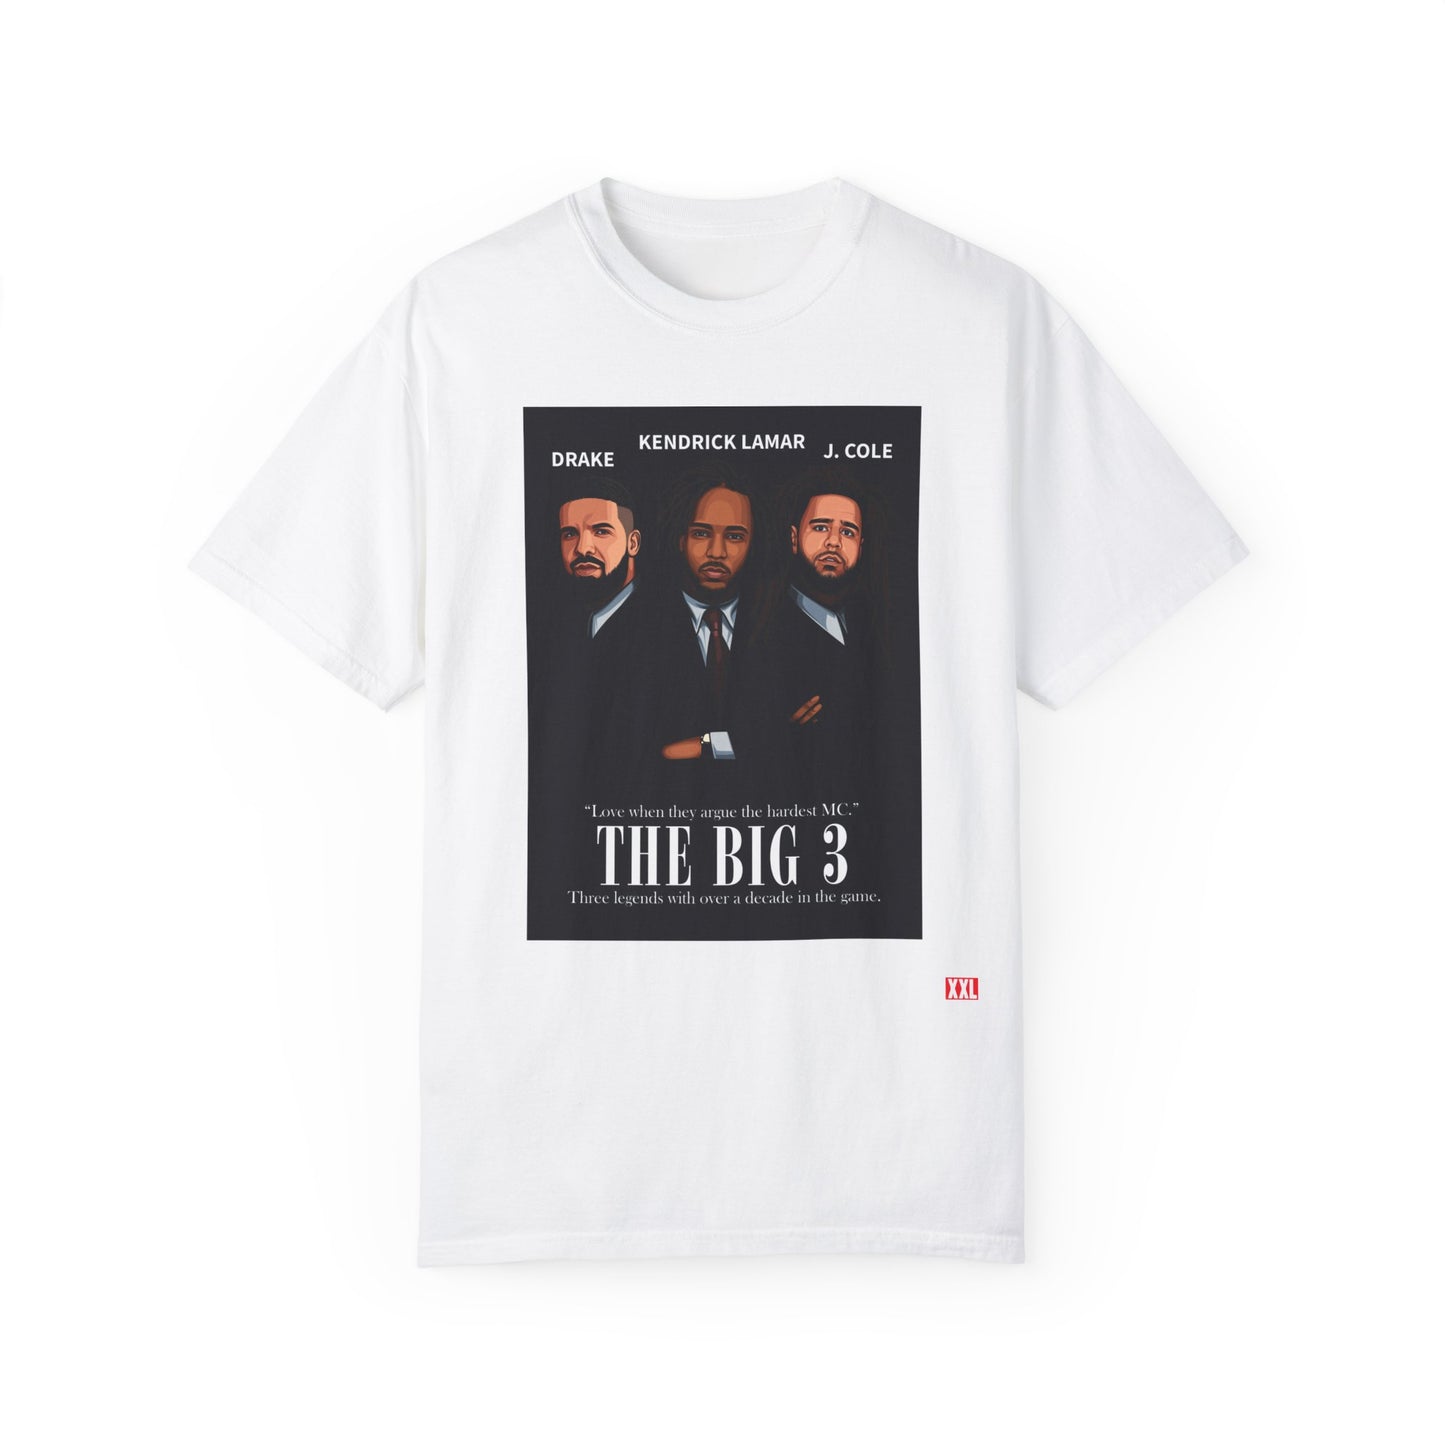 The Big 3 T-shirt